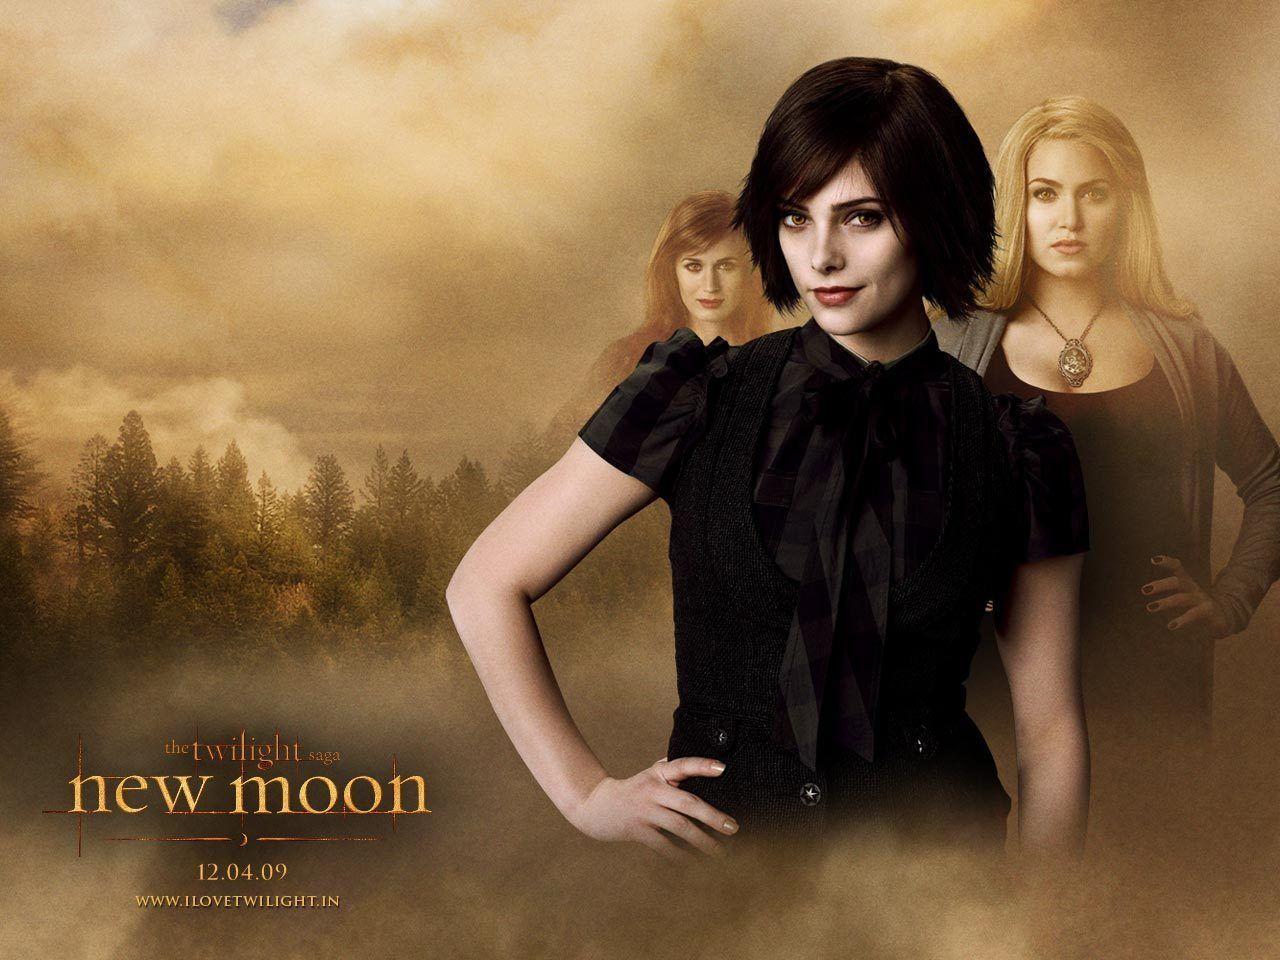 twilight saga new moon poster.